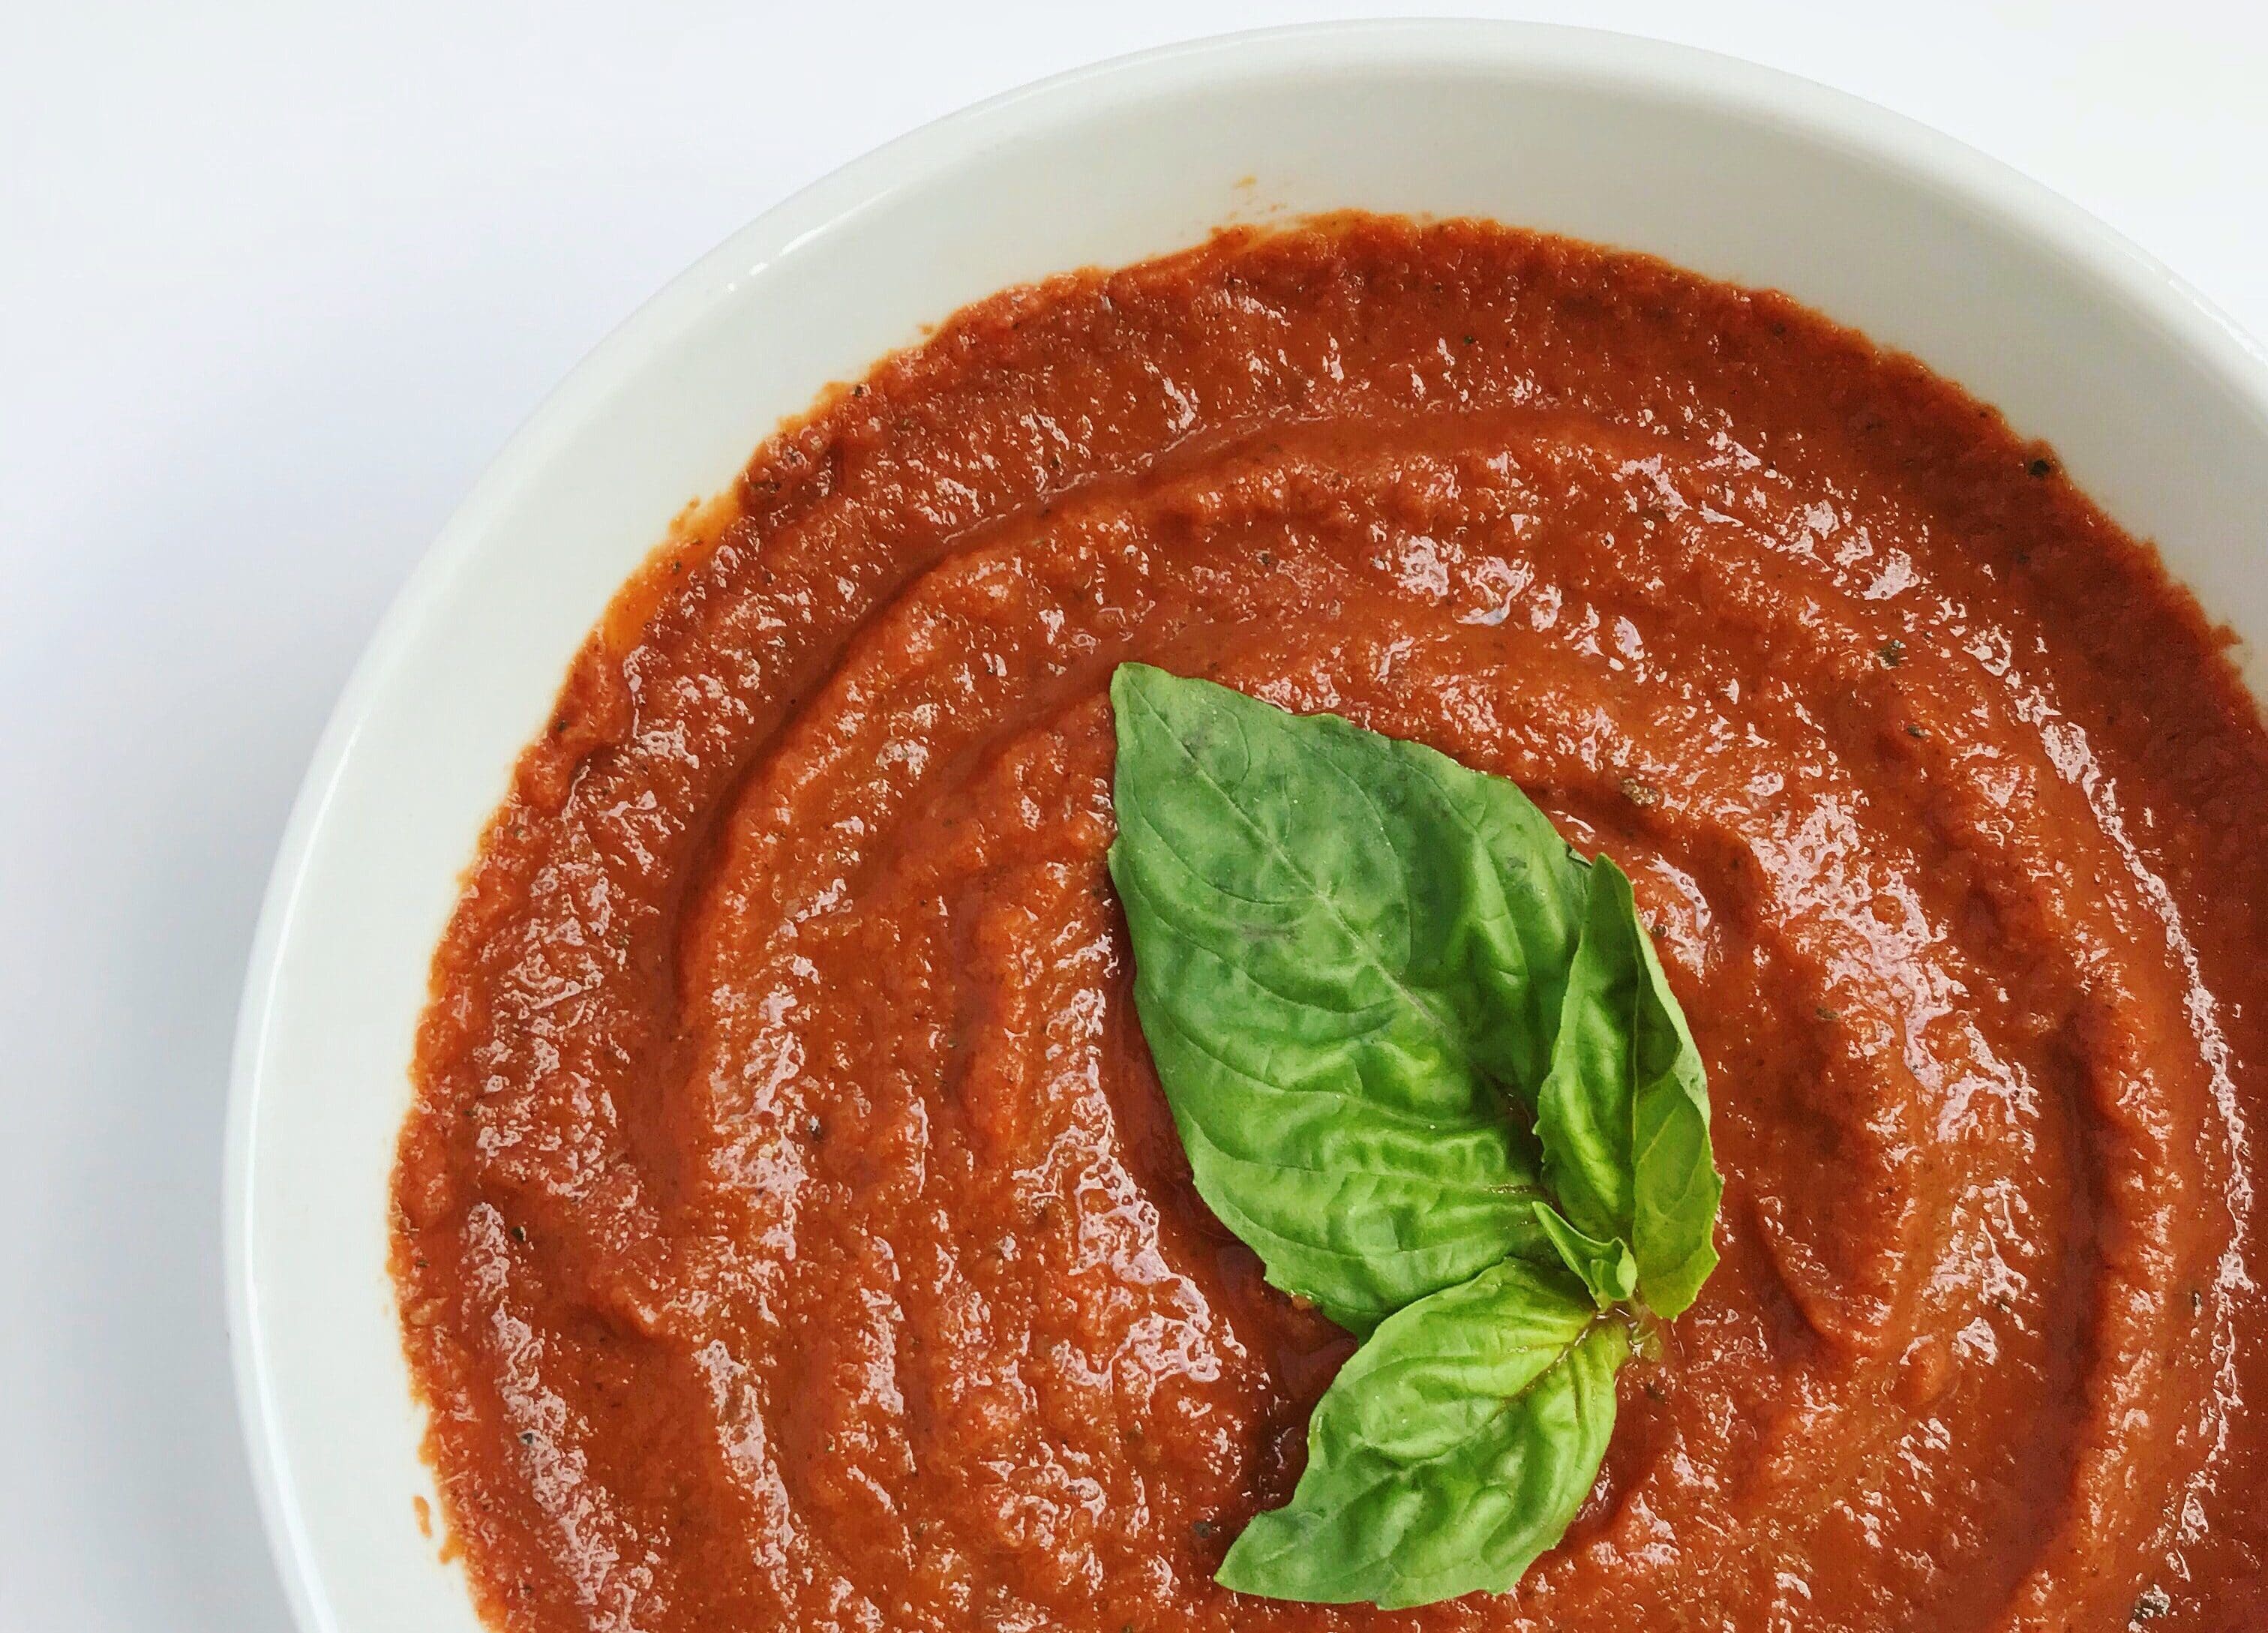 Tomato-free pasta sauce topped with fresh basil